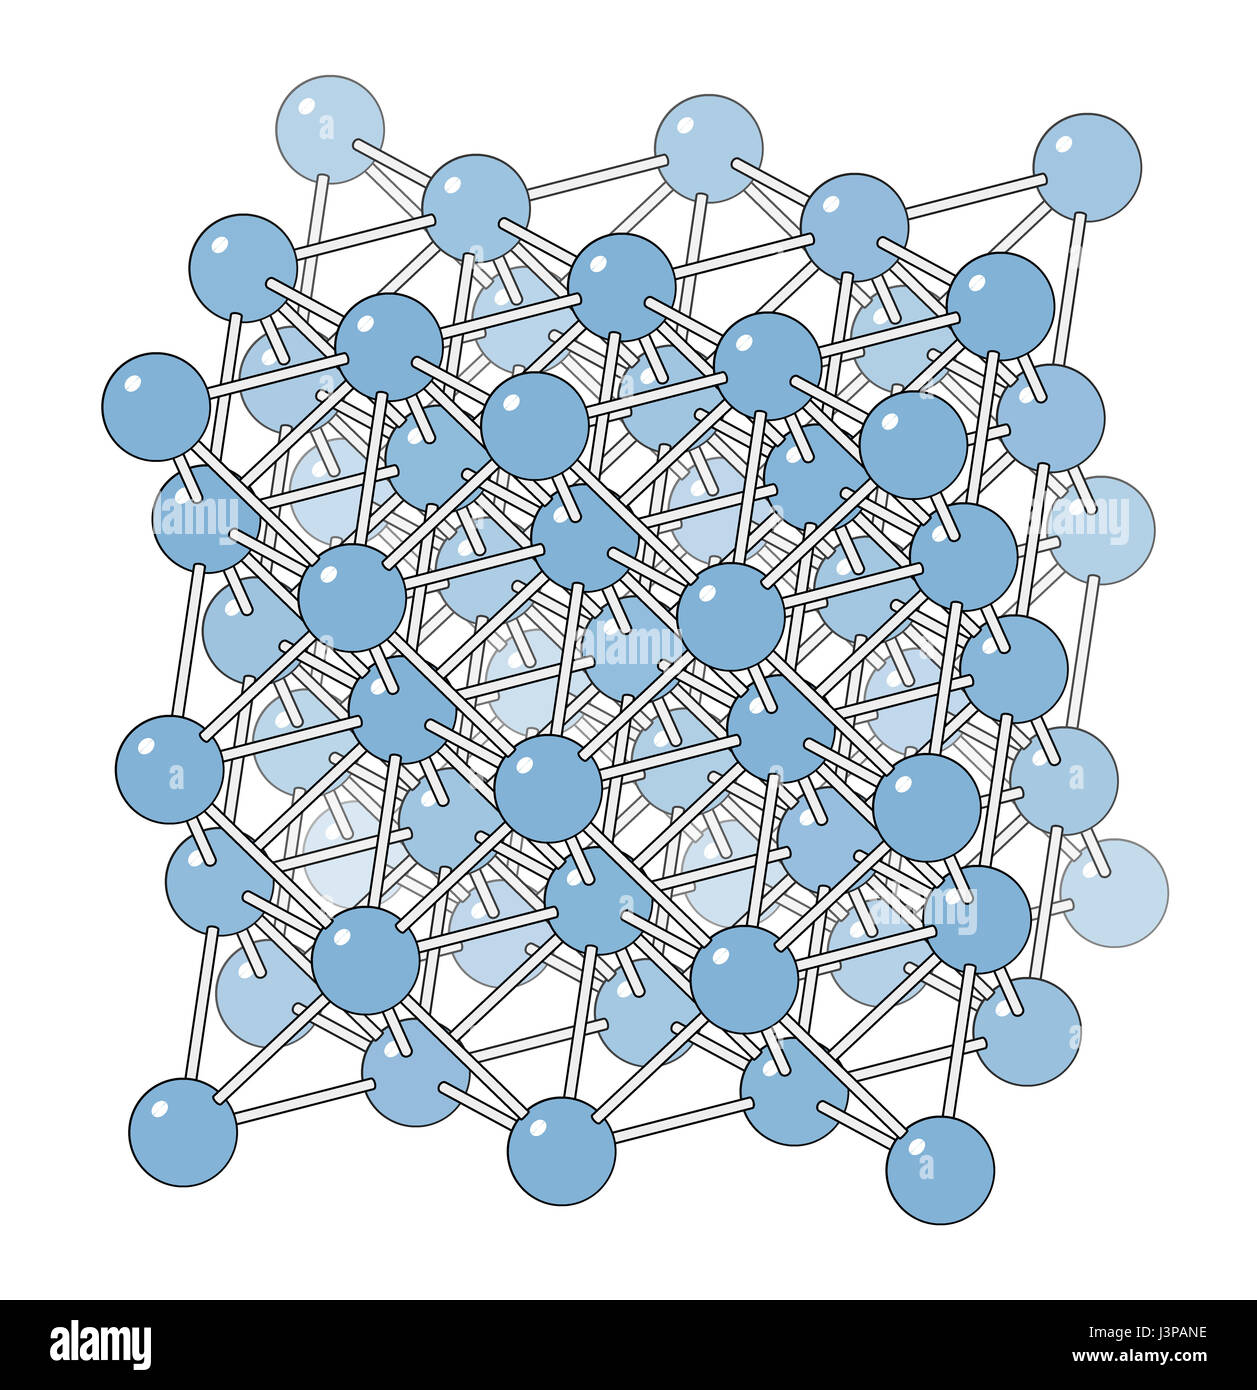 Aluminium (aluminum) metal, crystal structure Stock Photo - Alamy